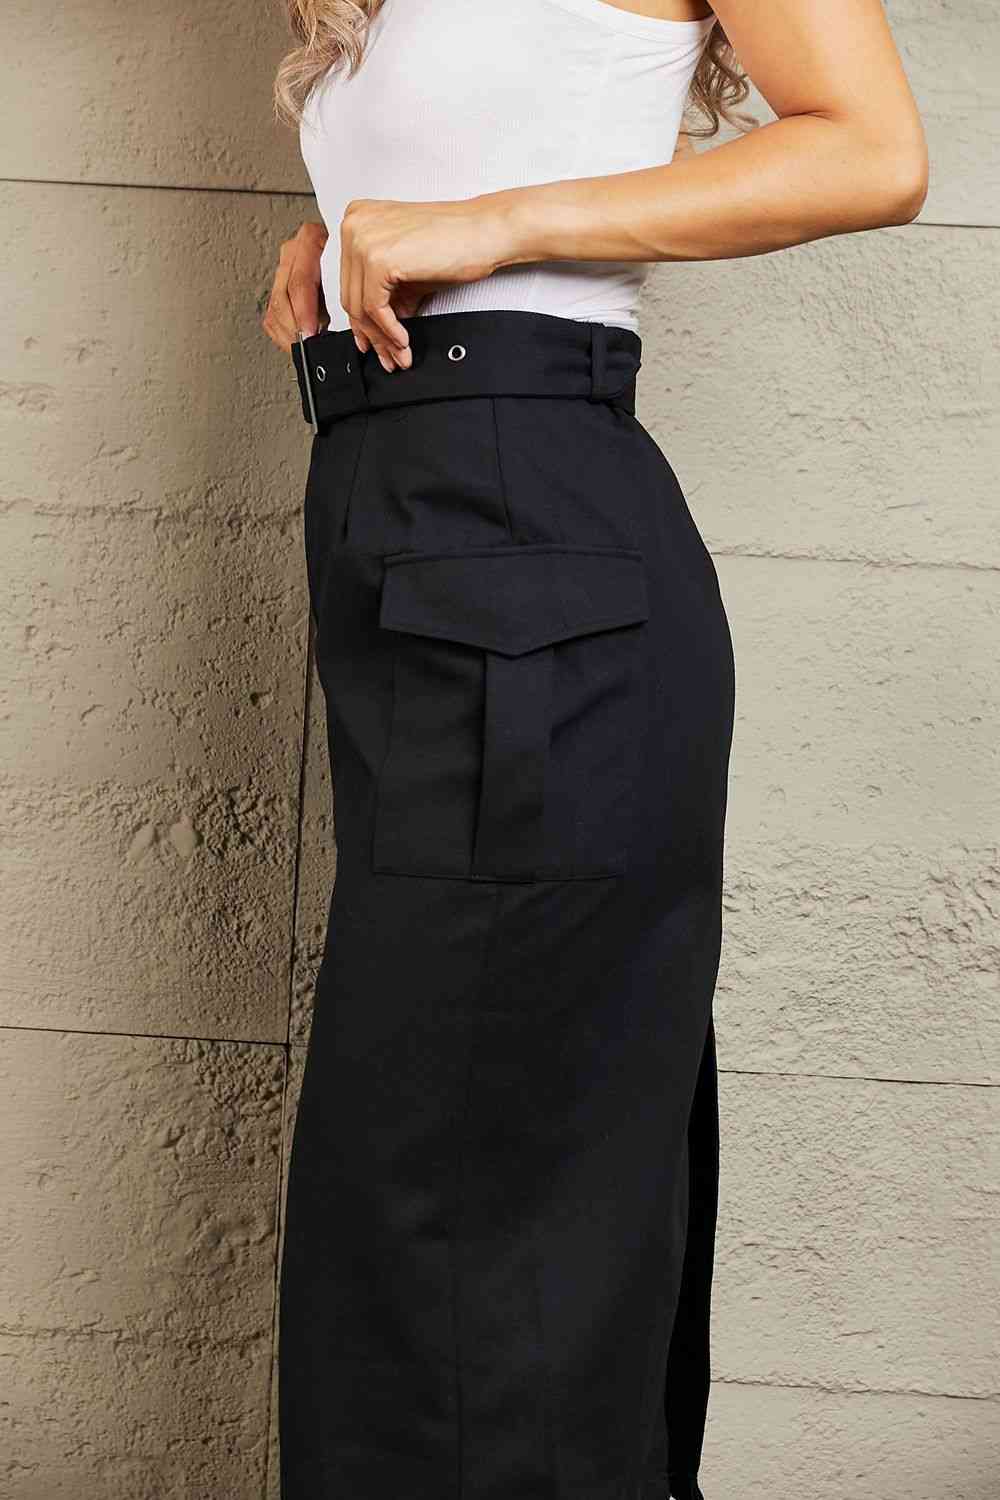 Dark Gray HYFVE Professional Poise Buckled Midi Skirt Sentient Beauty Fashions Apparel & Accessories